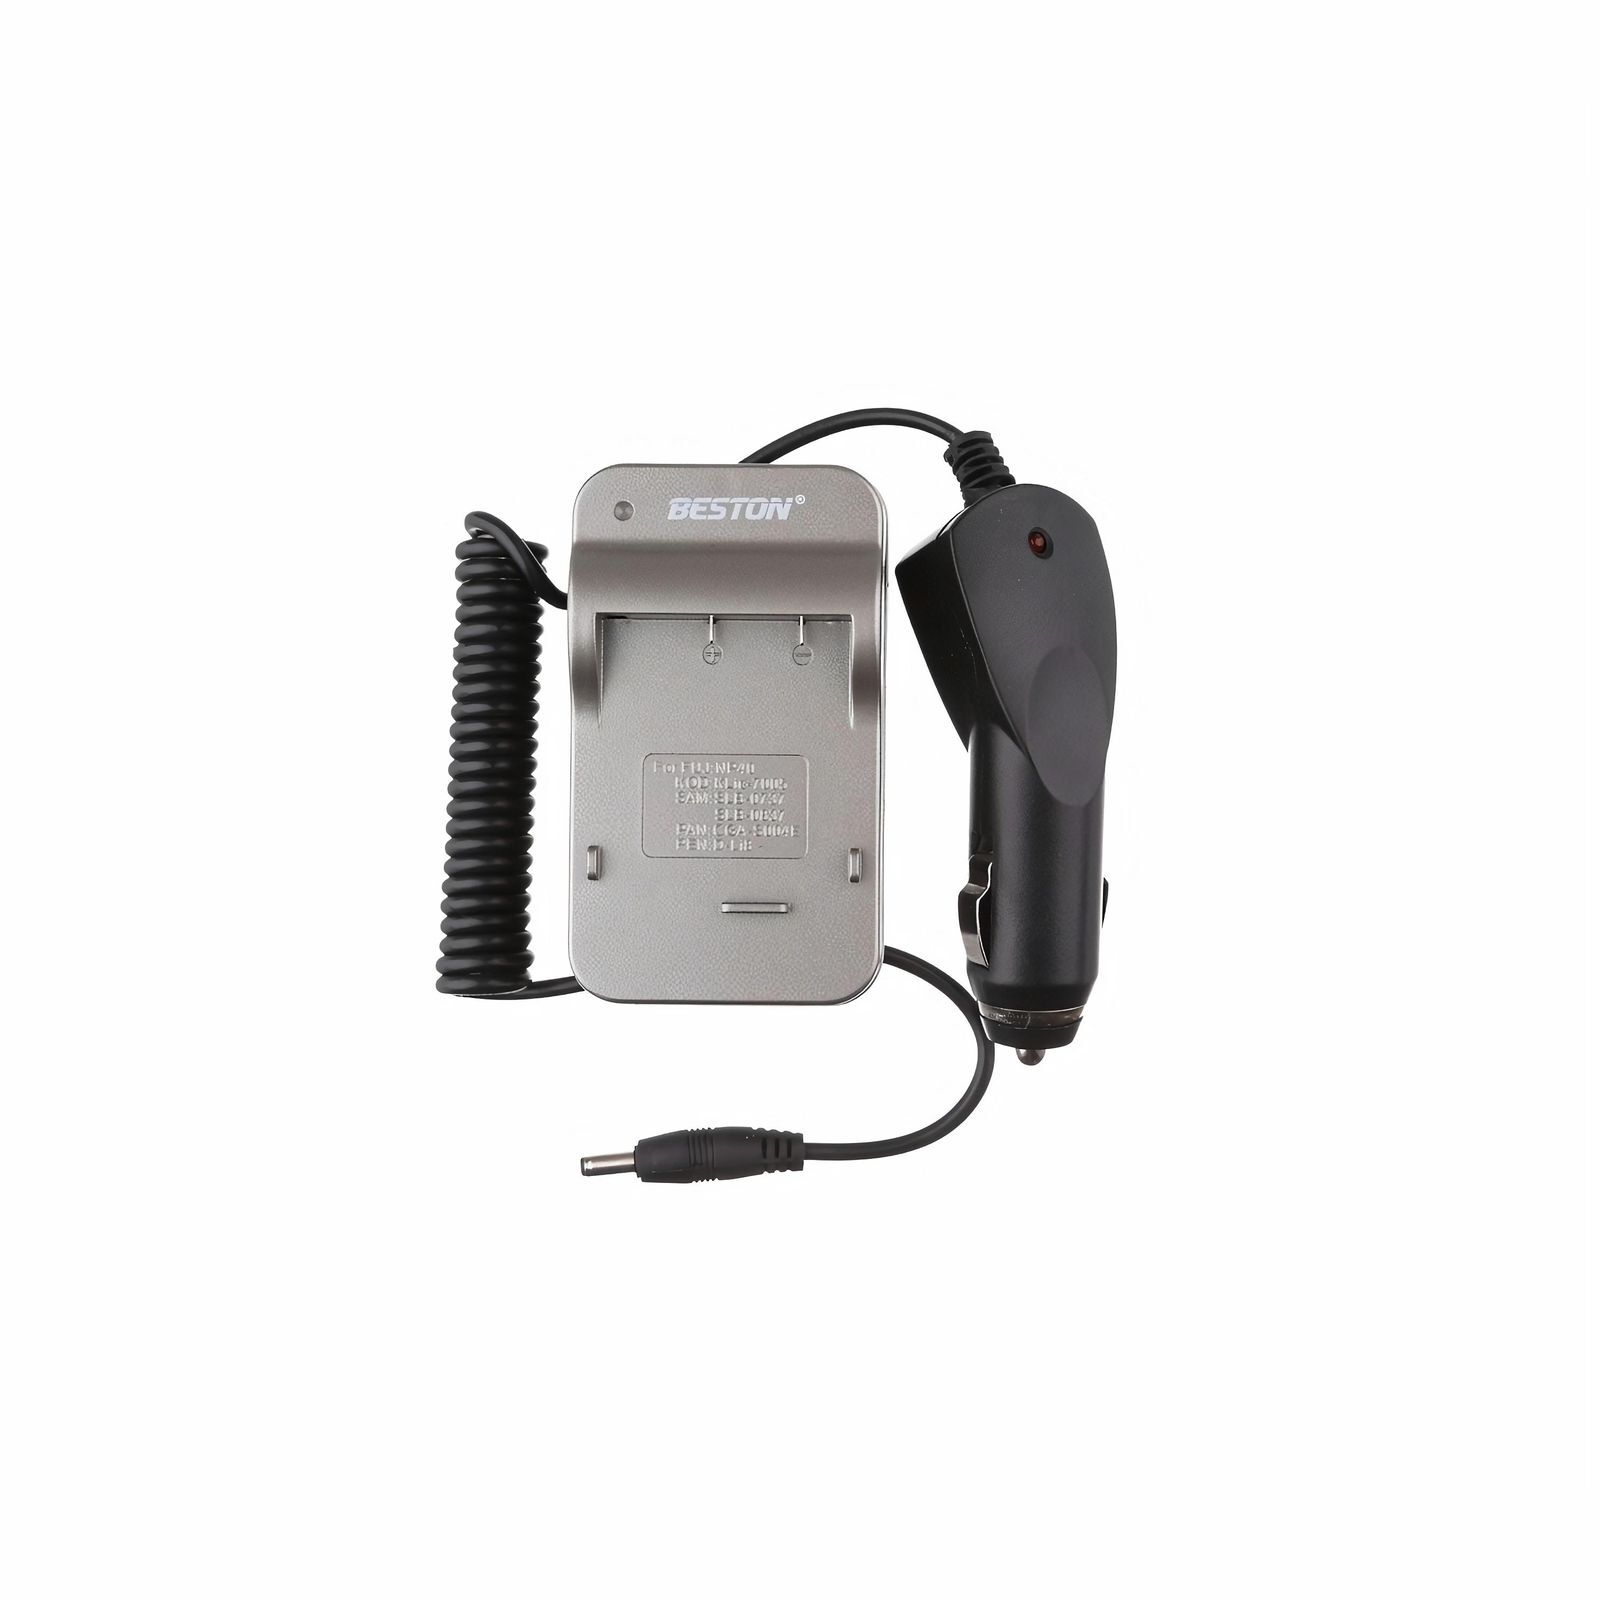 Зарядное устройство для фотоаппарата Fuji NP-40/KLIC- 7005/SLB 0737/SLB 0837/CGA-S004E